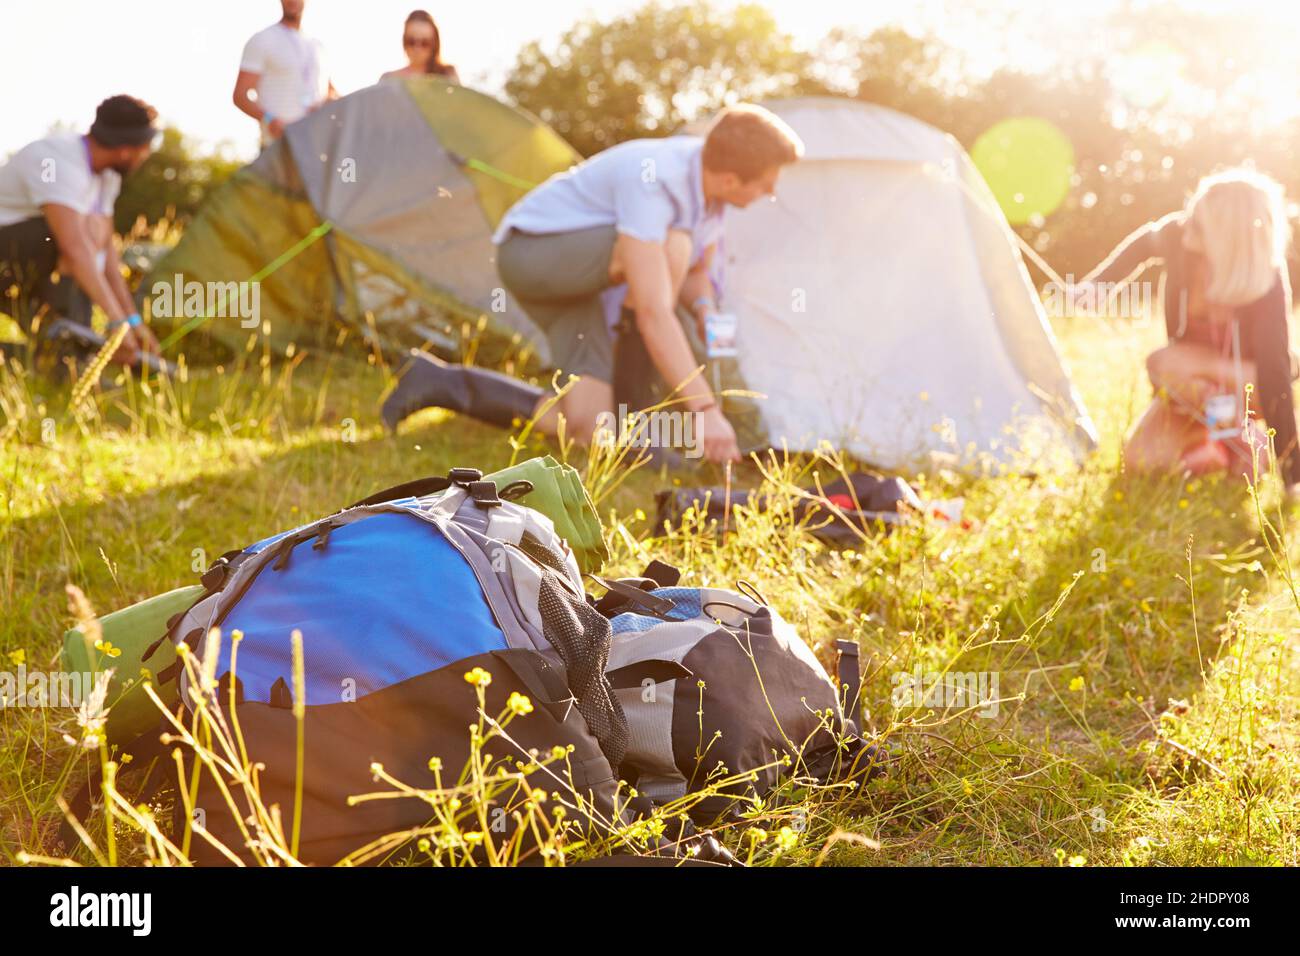 Zelt, Camping, Zeltbau, Zelte, Lager, campings, Zeltkonstruktionen Stockfoto